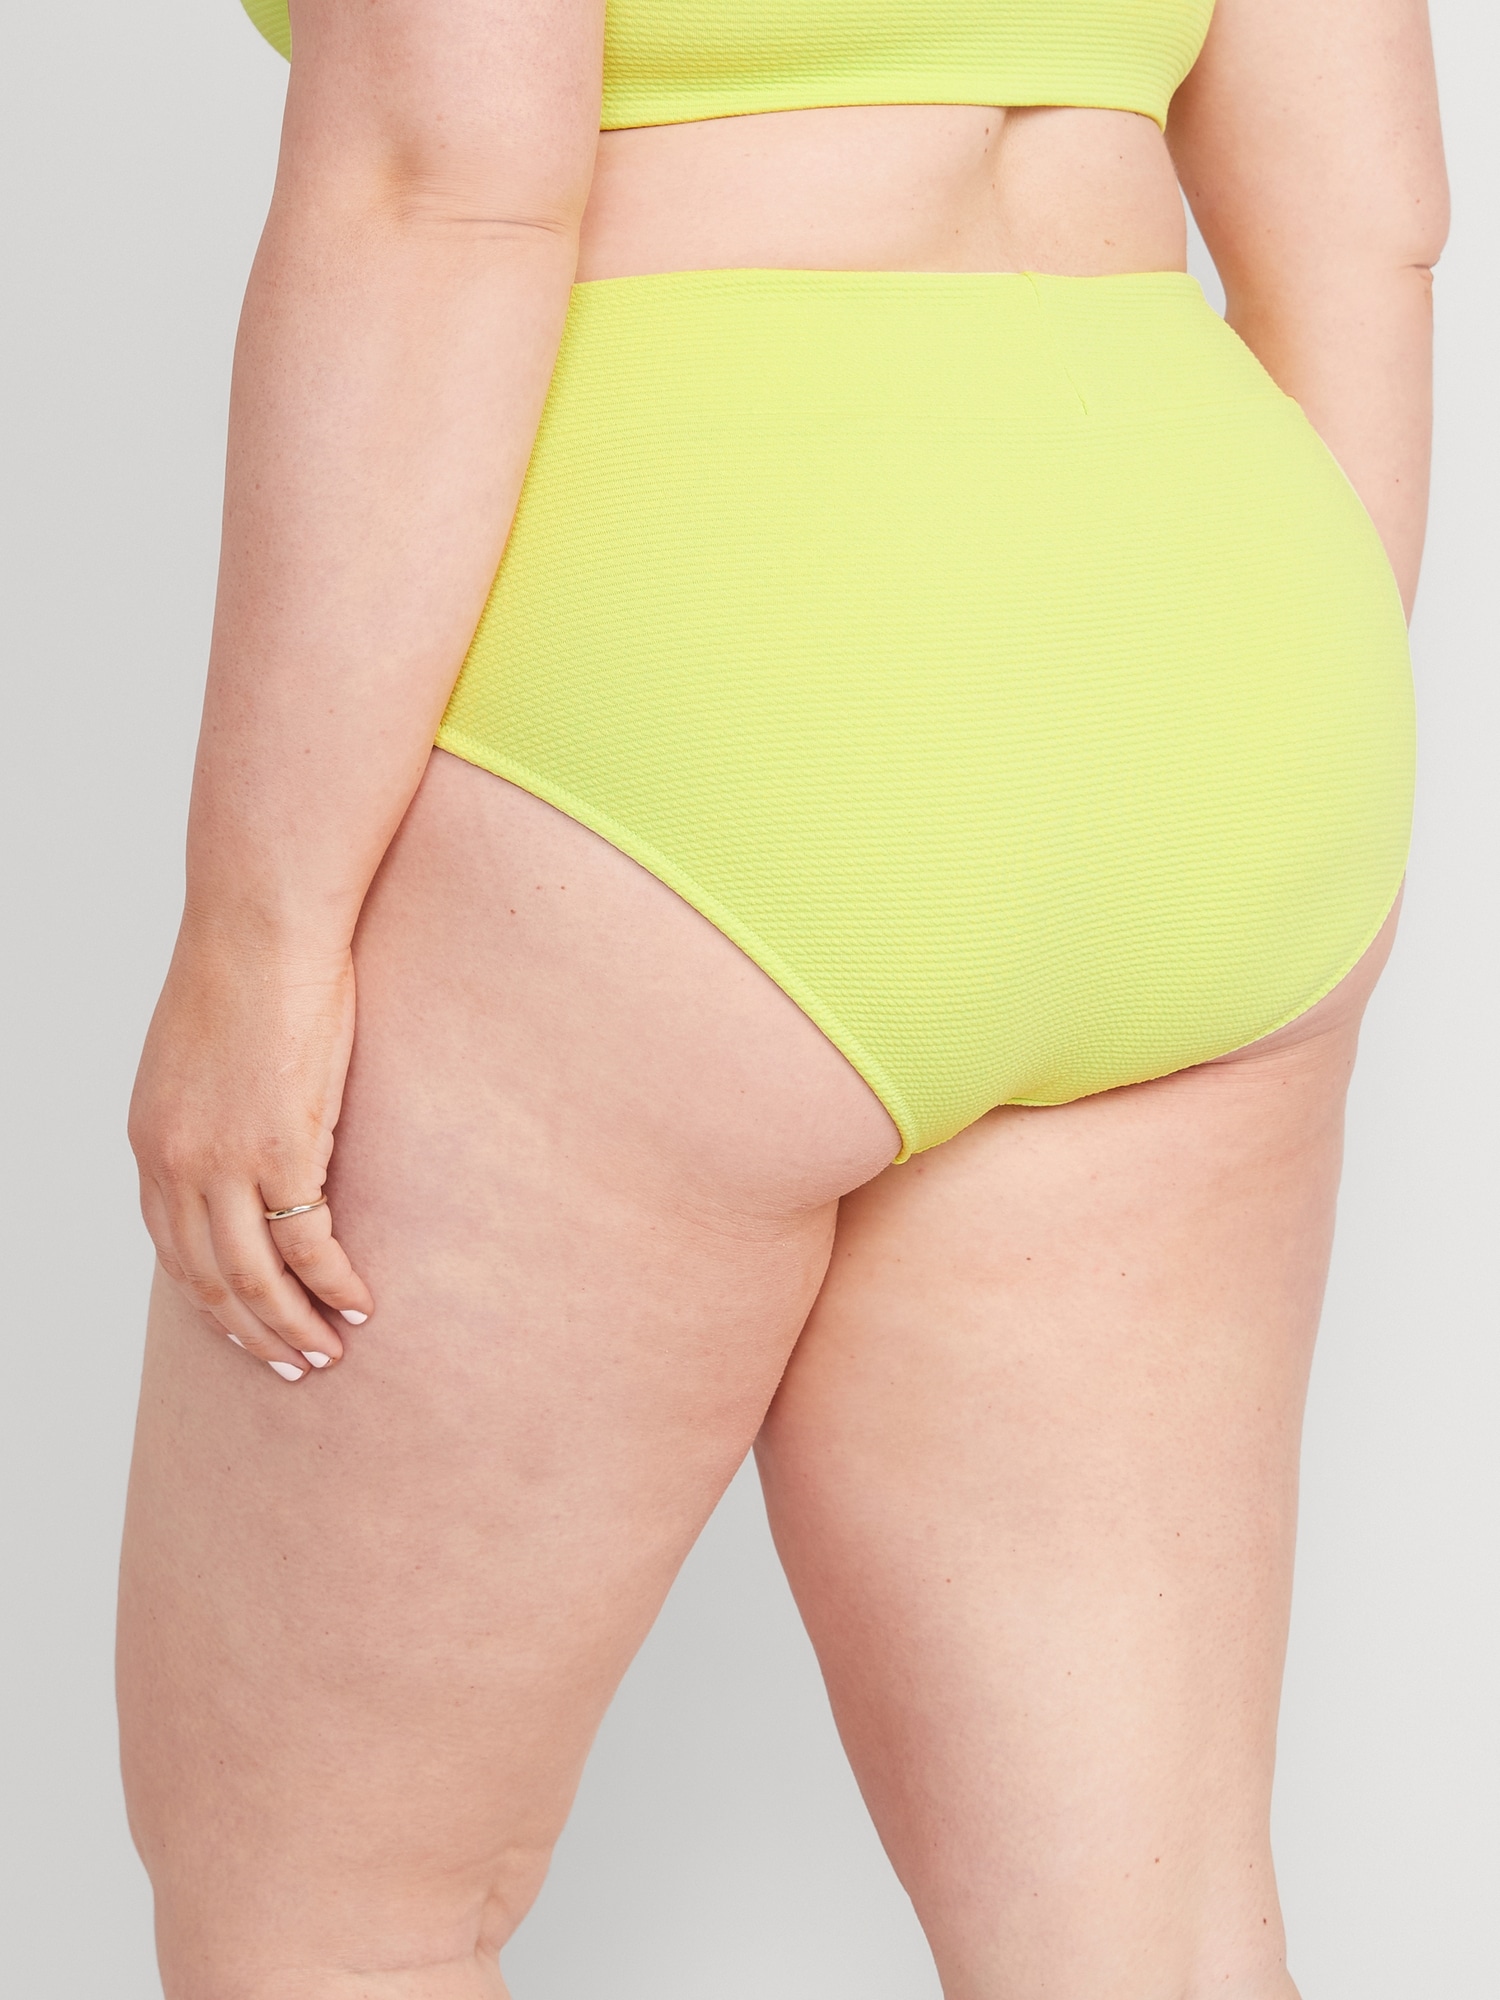 Torrid Women's Plus Size Cheeky Panties Size L Large Neon Yellow